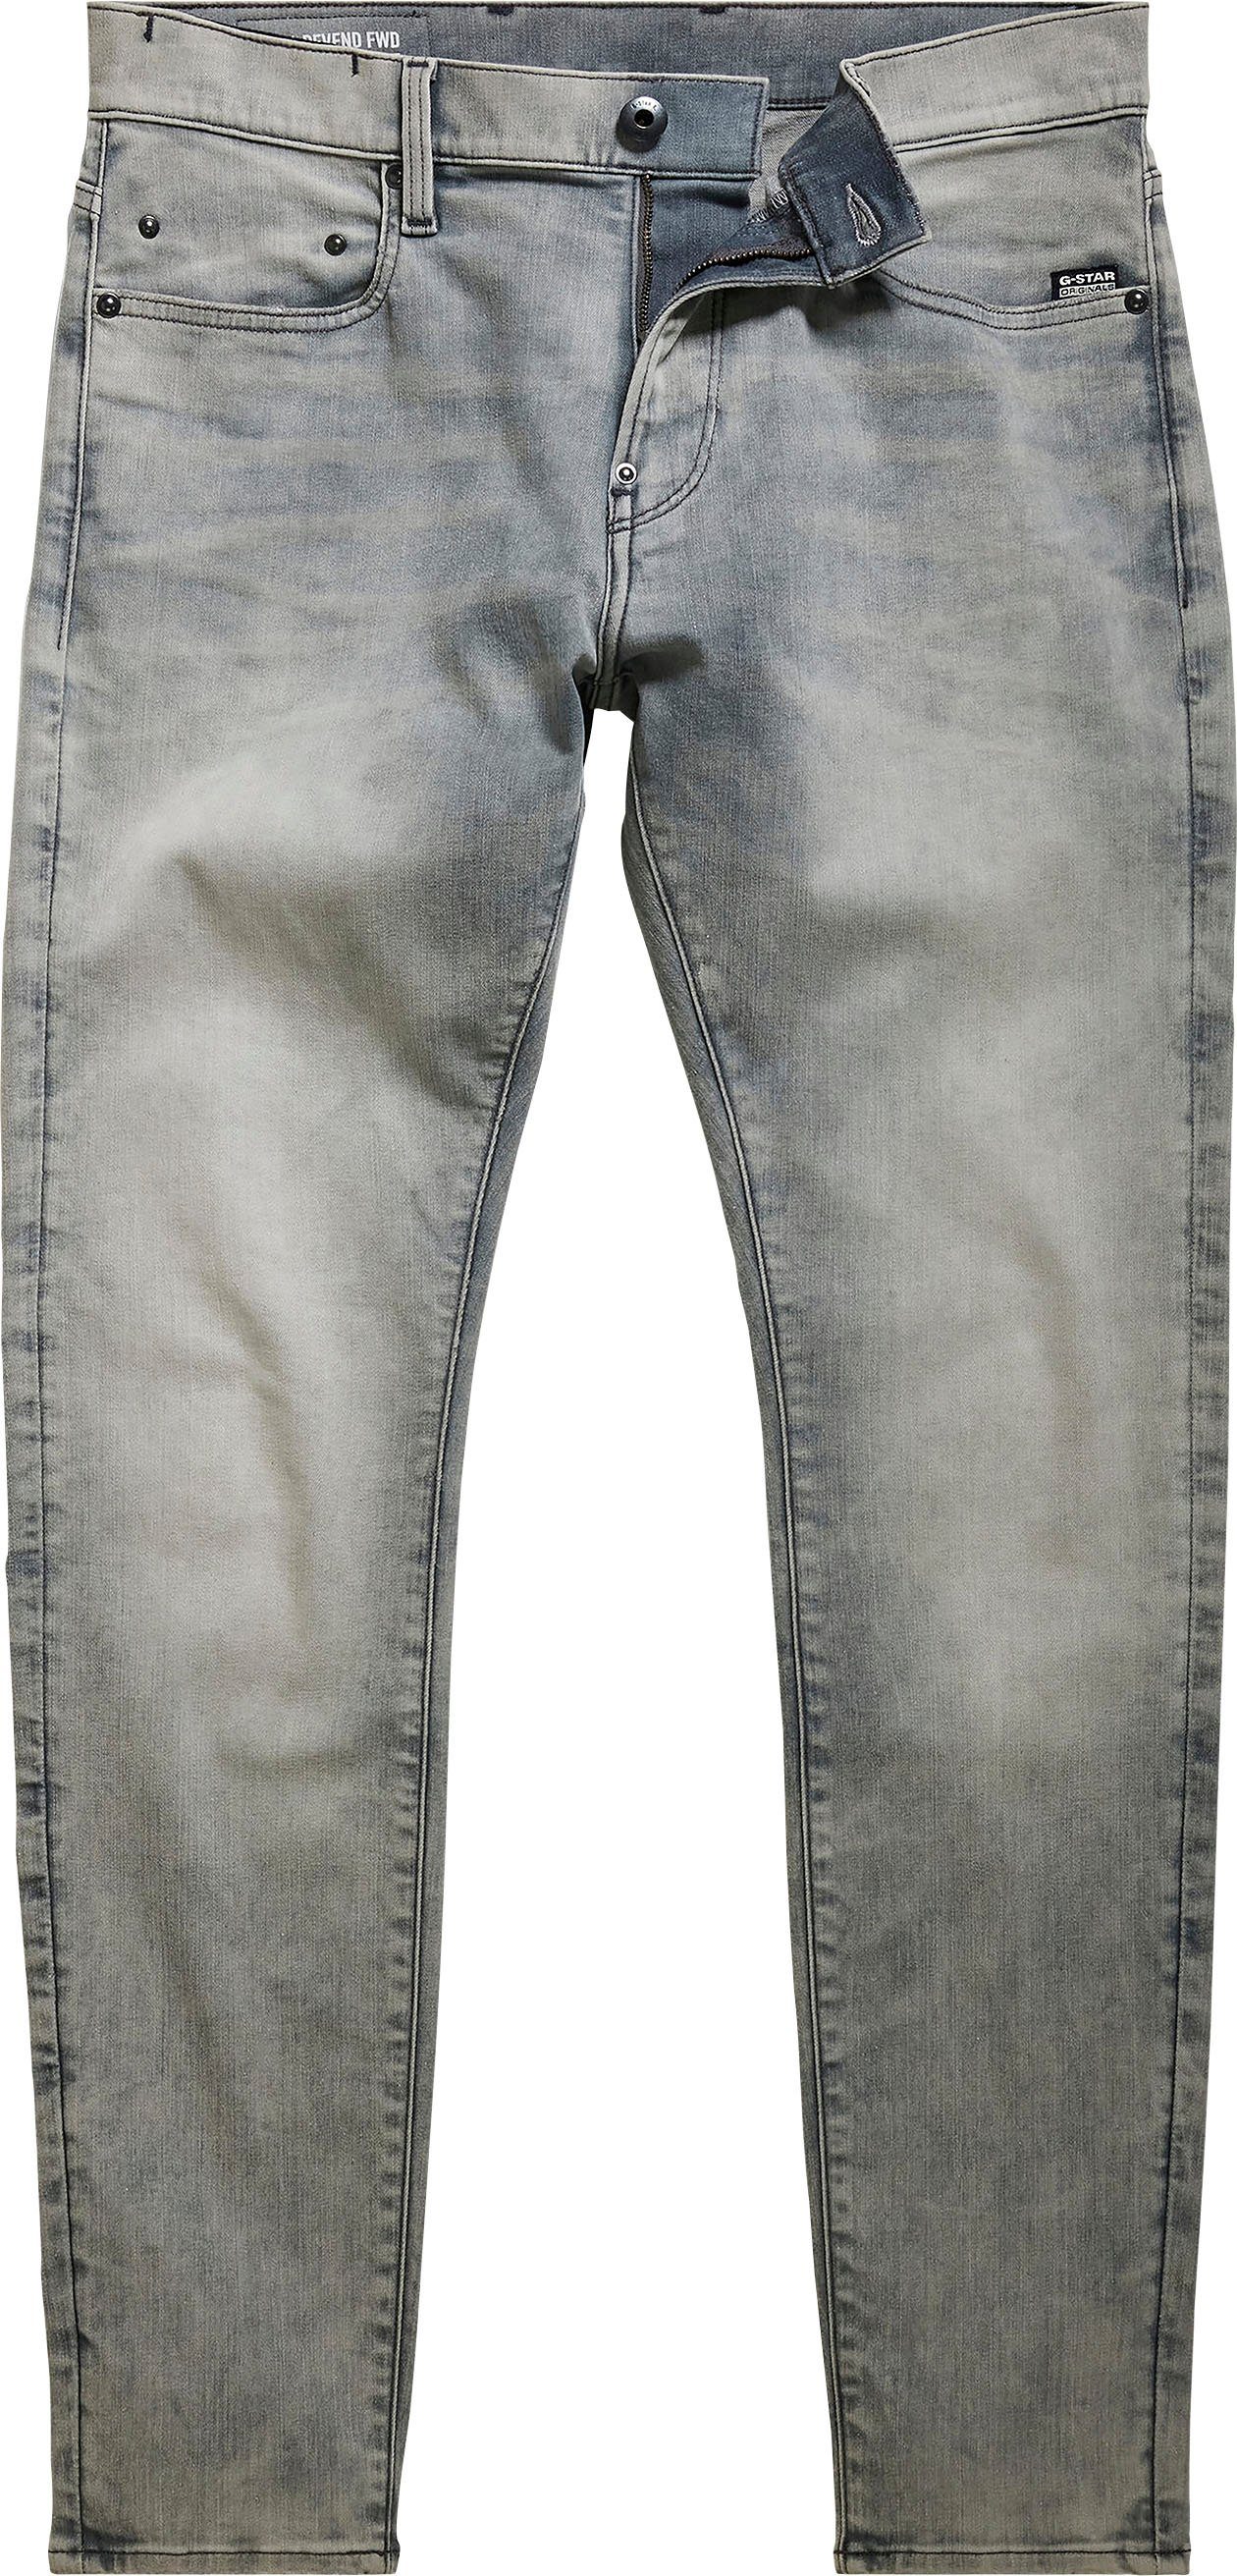 Skinny-fit-Jeans faded RAW G-Star antic radium